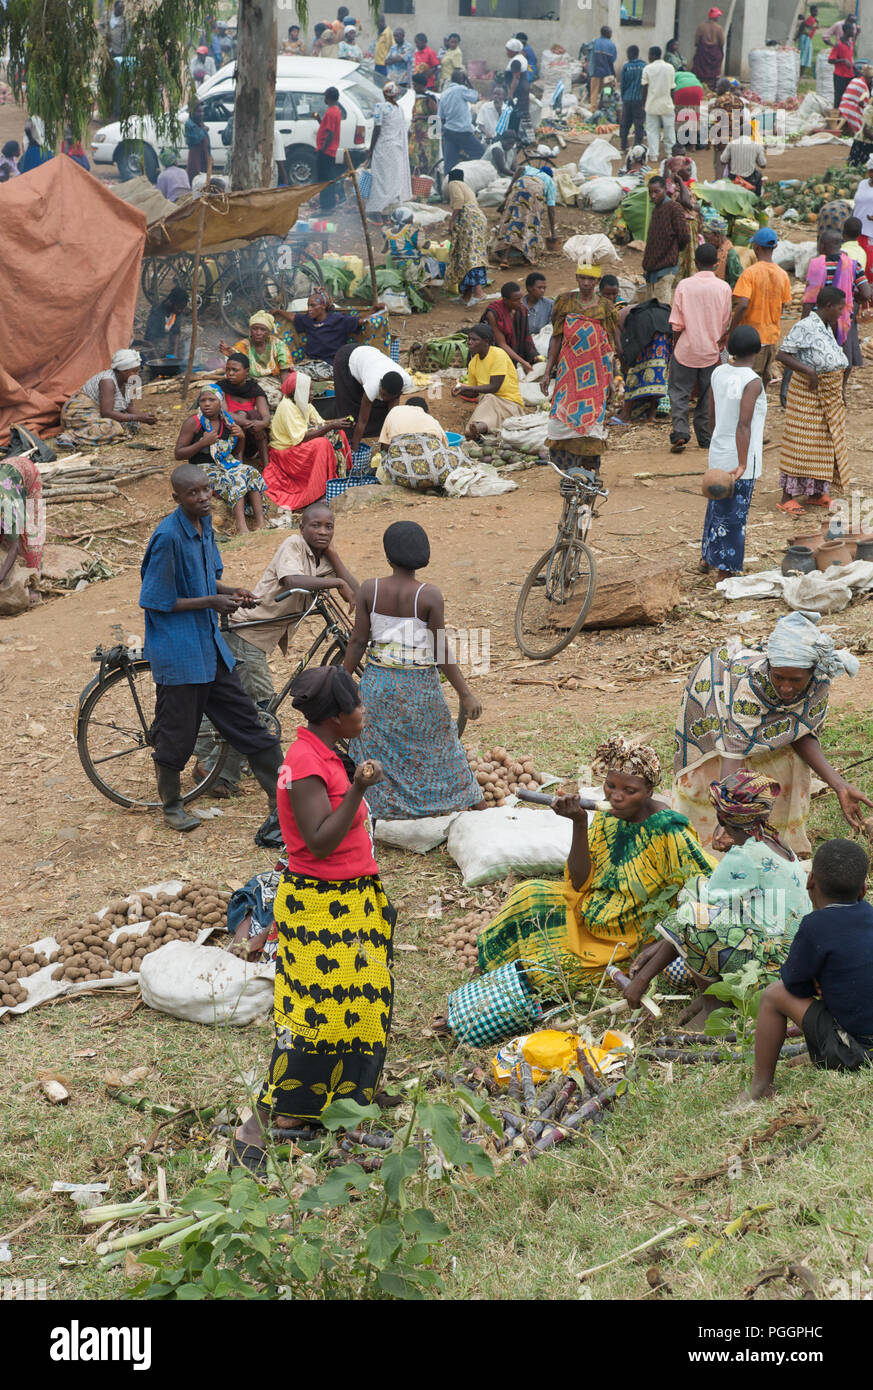 KASESE, UGANDA: JULY 22 2011: Bustling market in an unknown town in rural Uganda. Stock Photo